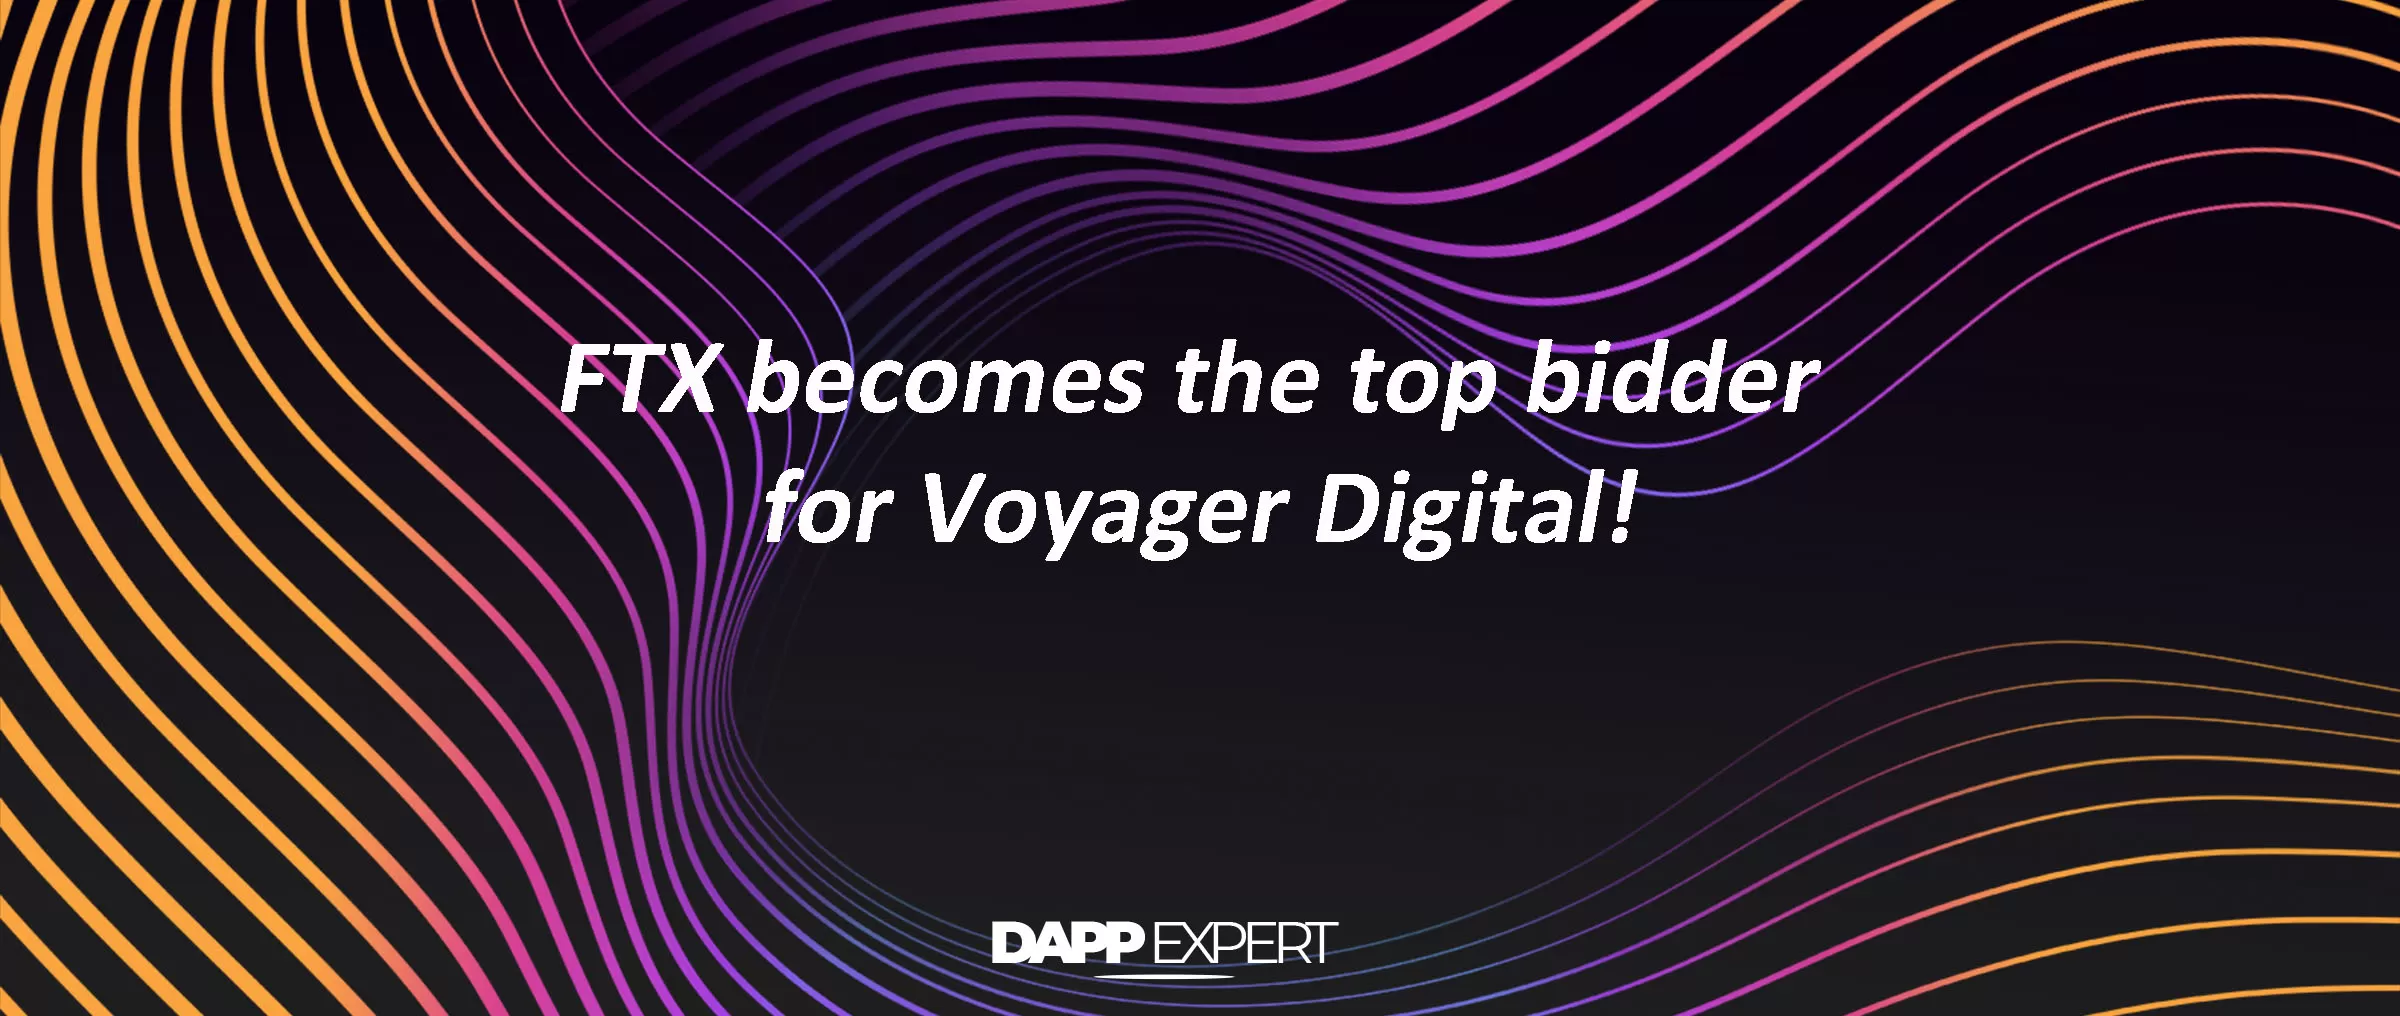 FTX becomes the top bidder for Voyager Digital!